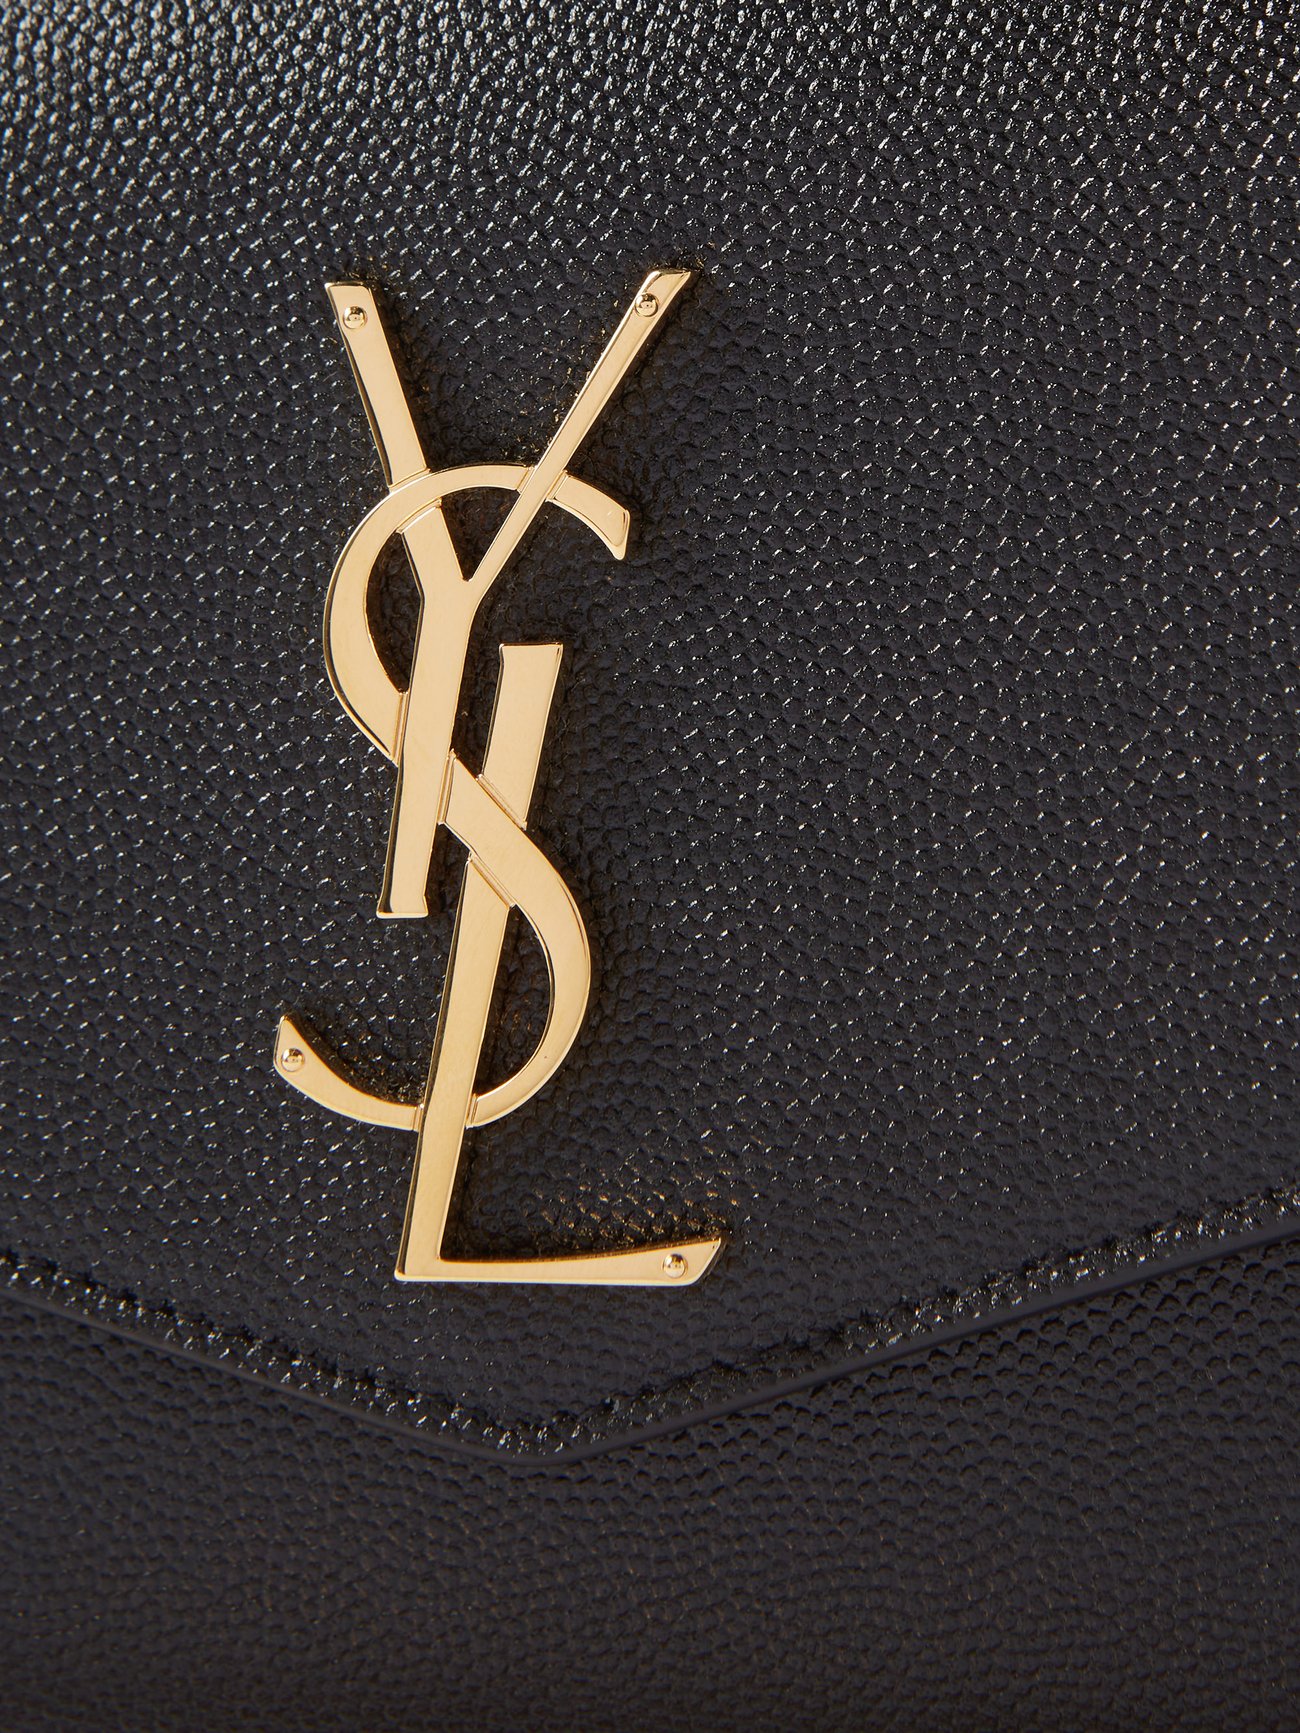 Black Uptown YSL-logo leather cross-body bag, Saint Laurent